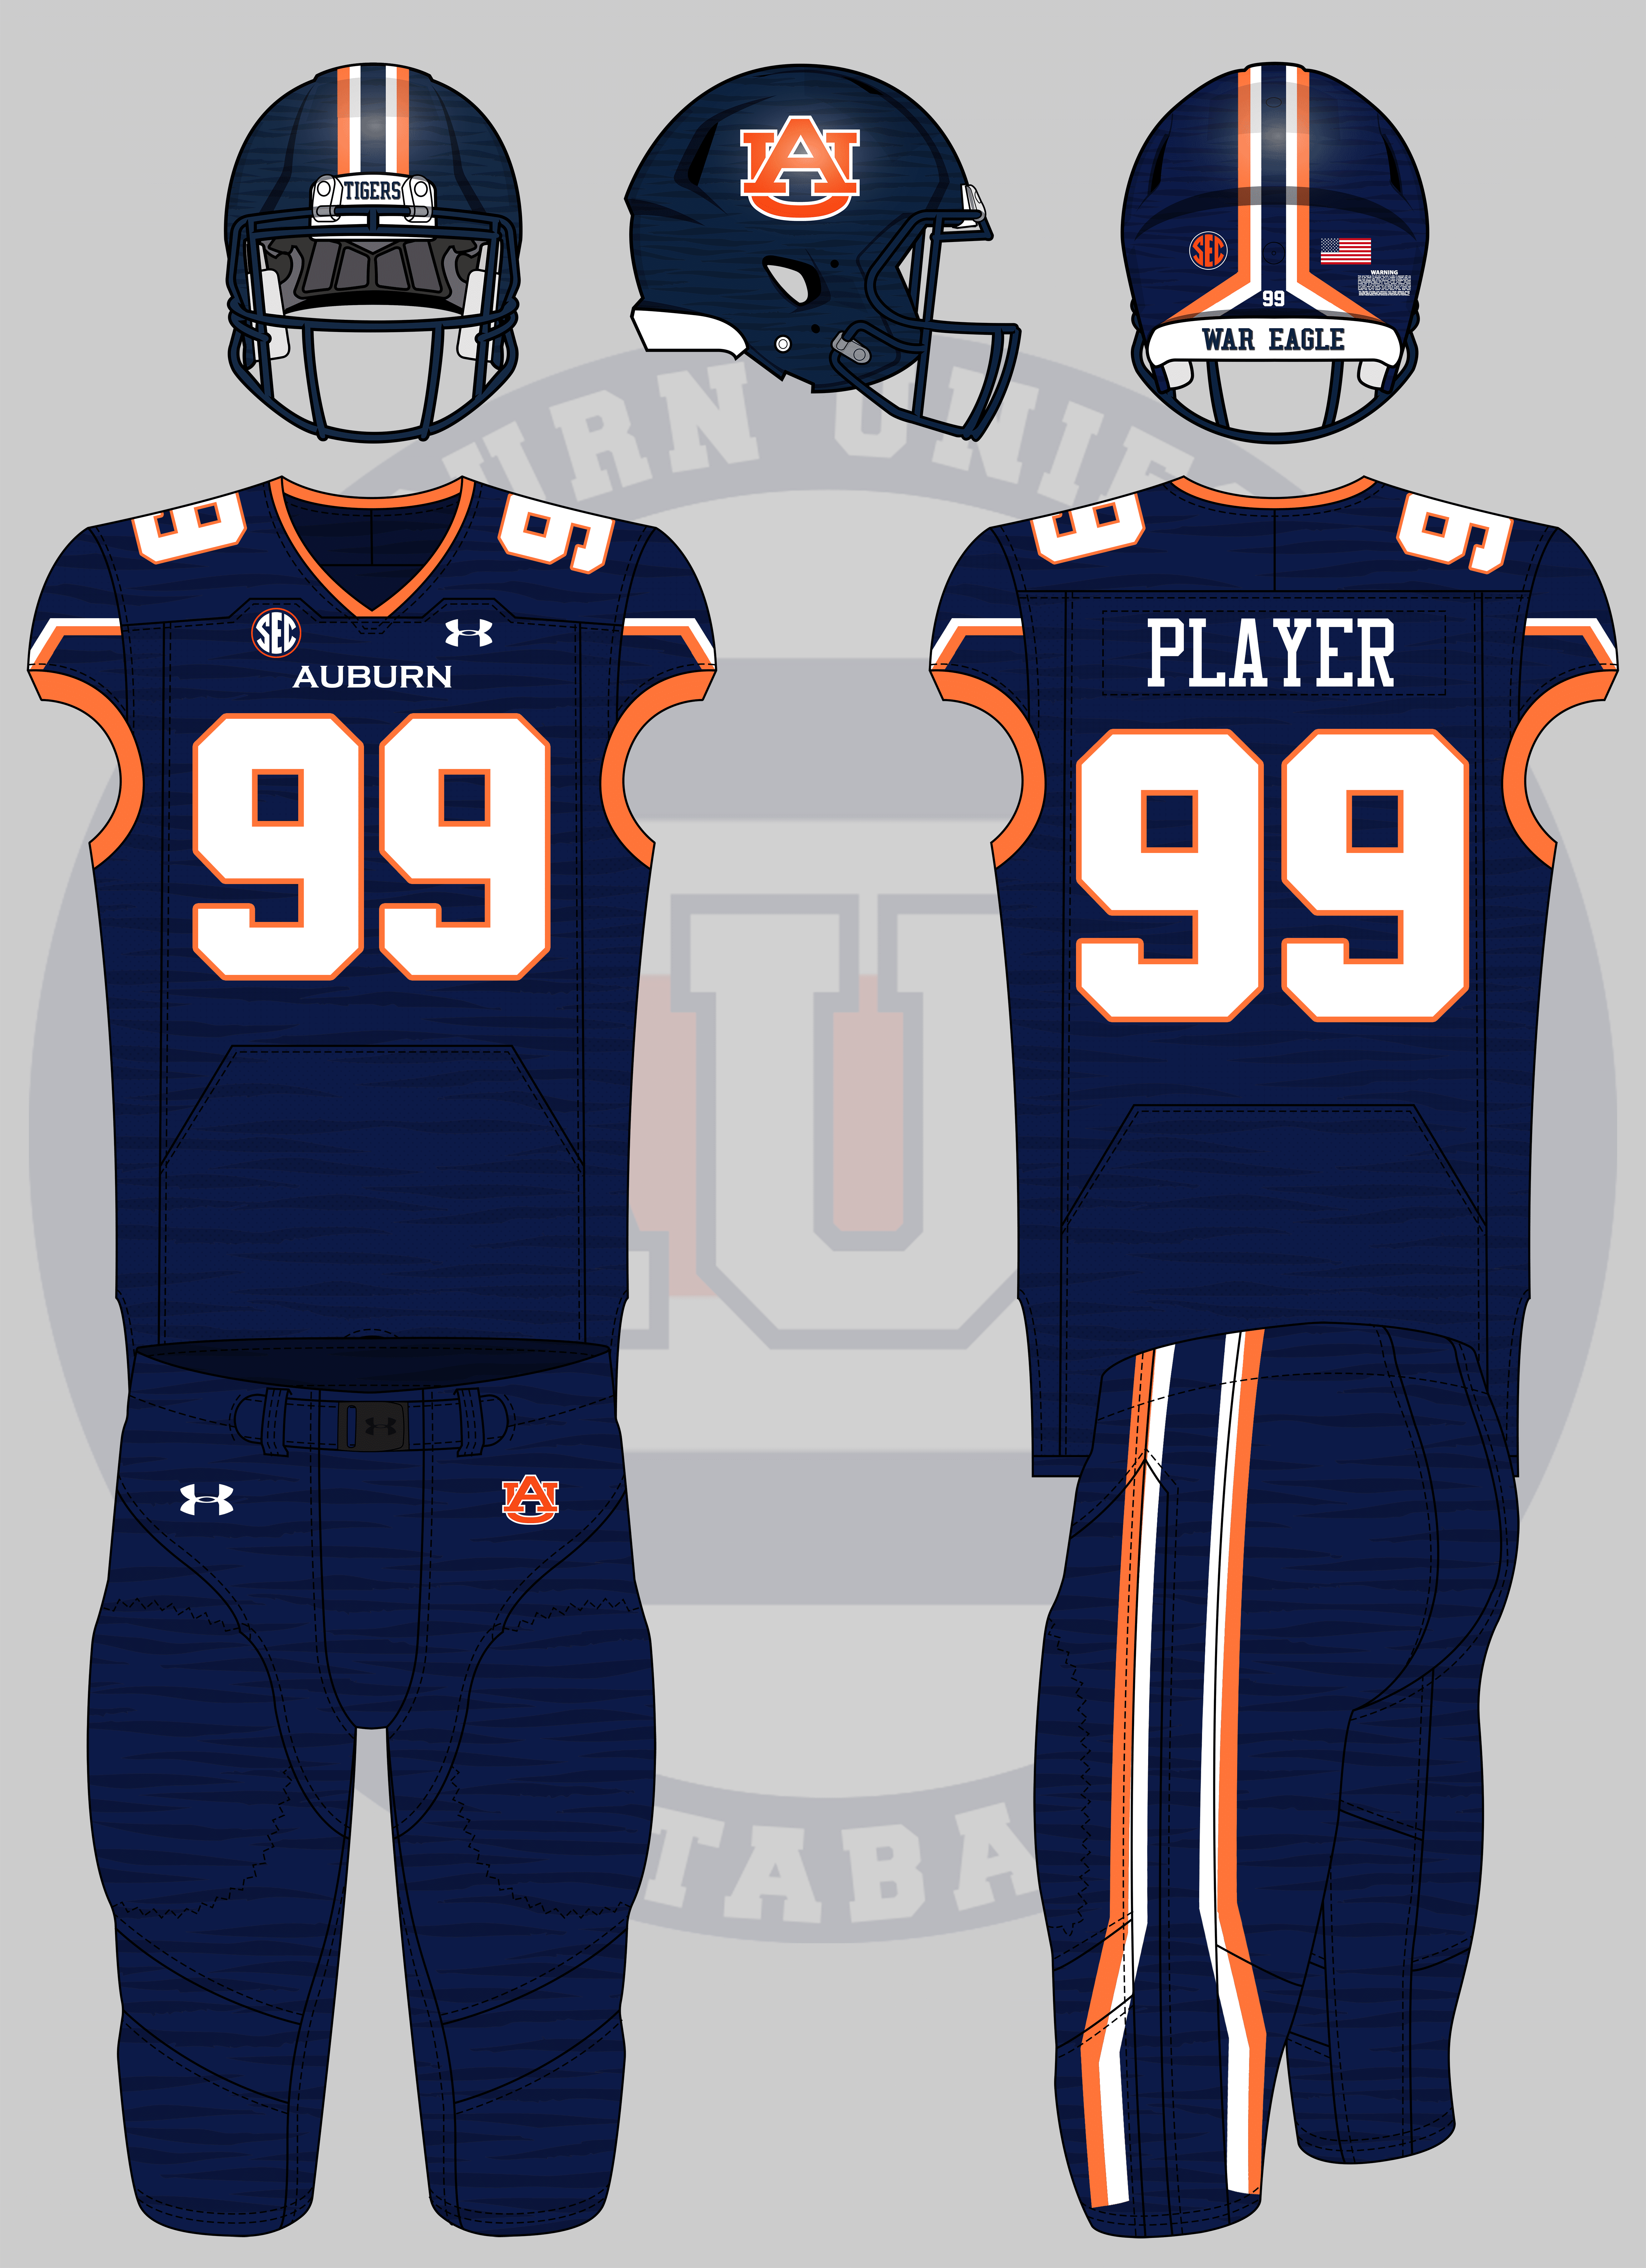 LA RAMS, color rush uniform concept 2020